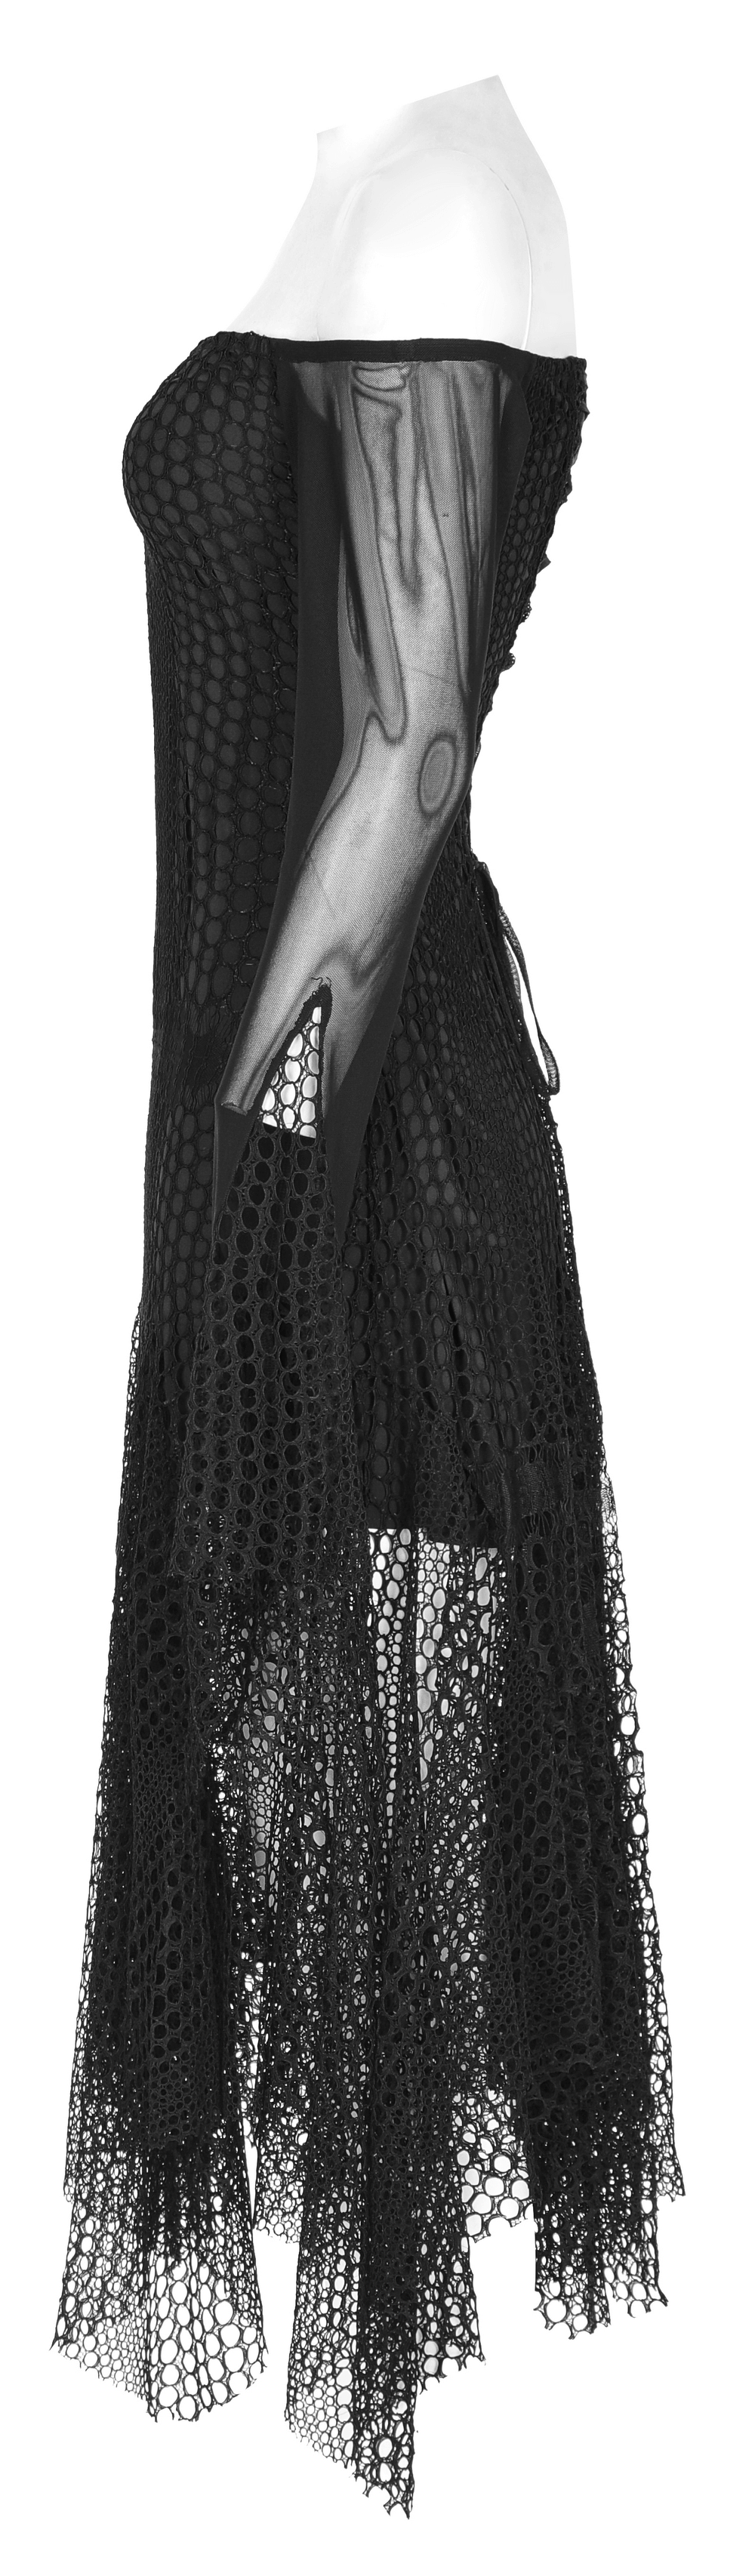 Asymmetrical Off-Shoulder Gothic Dress with Tassel Hem